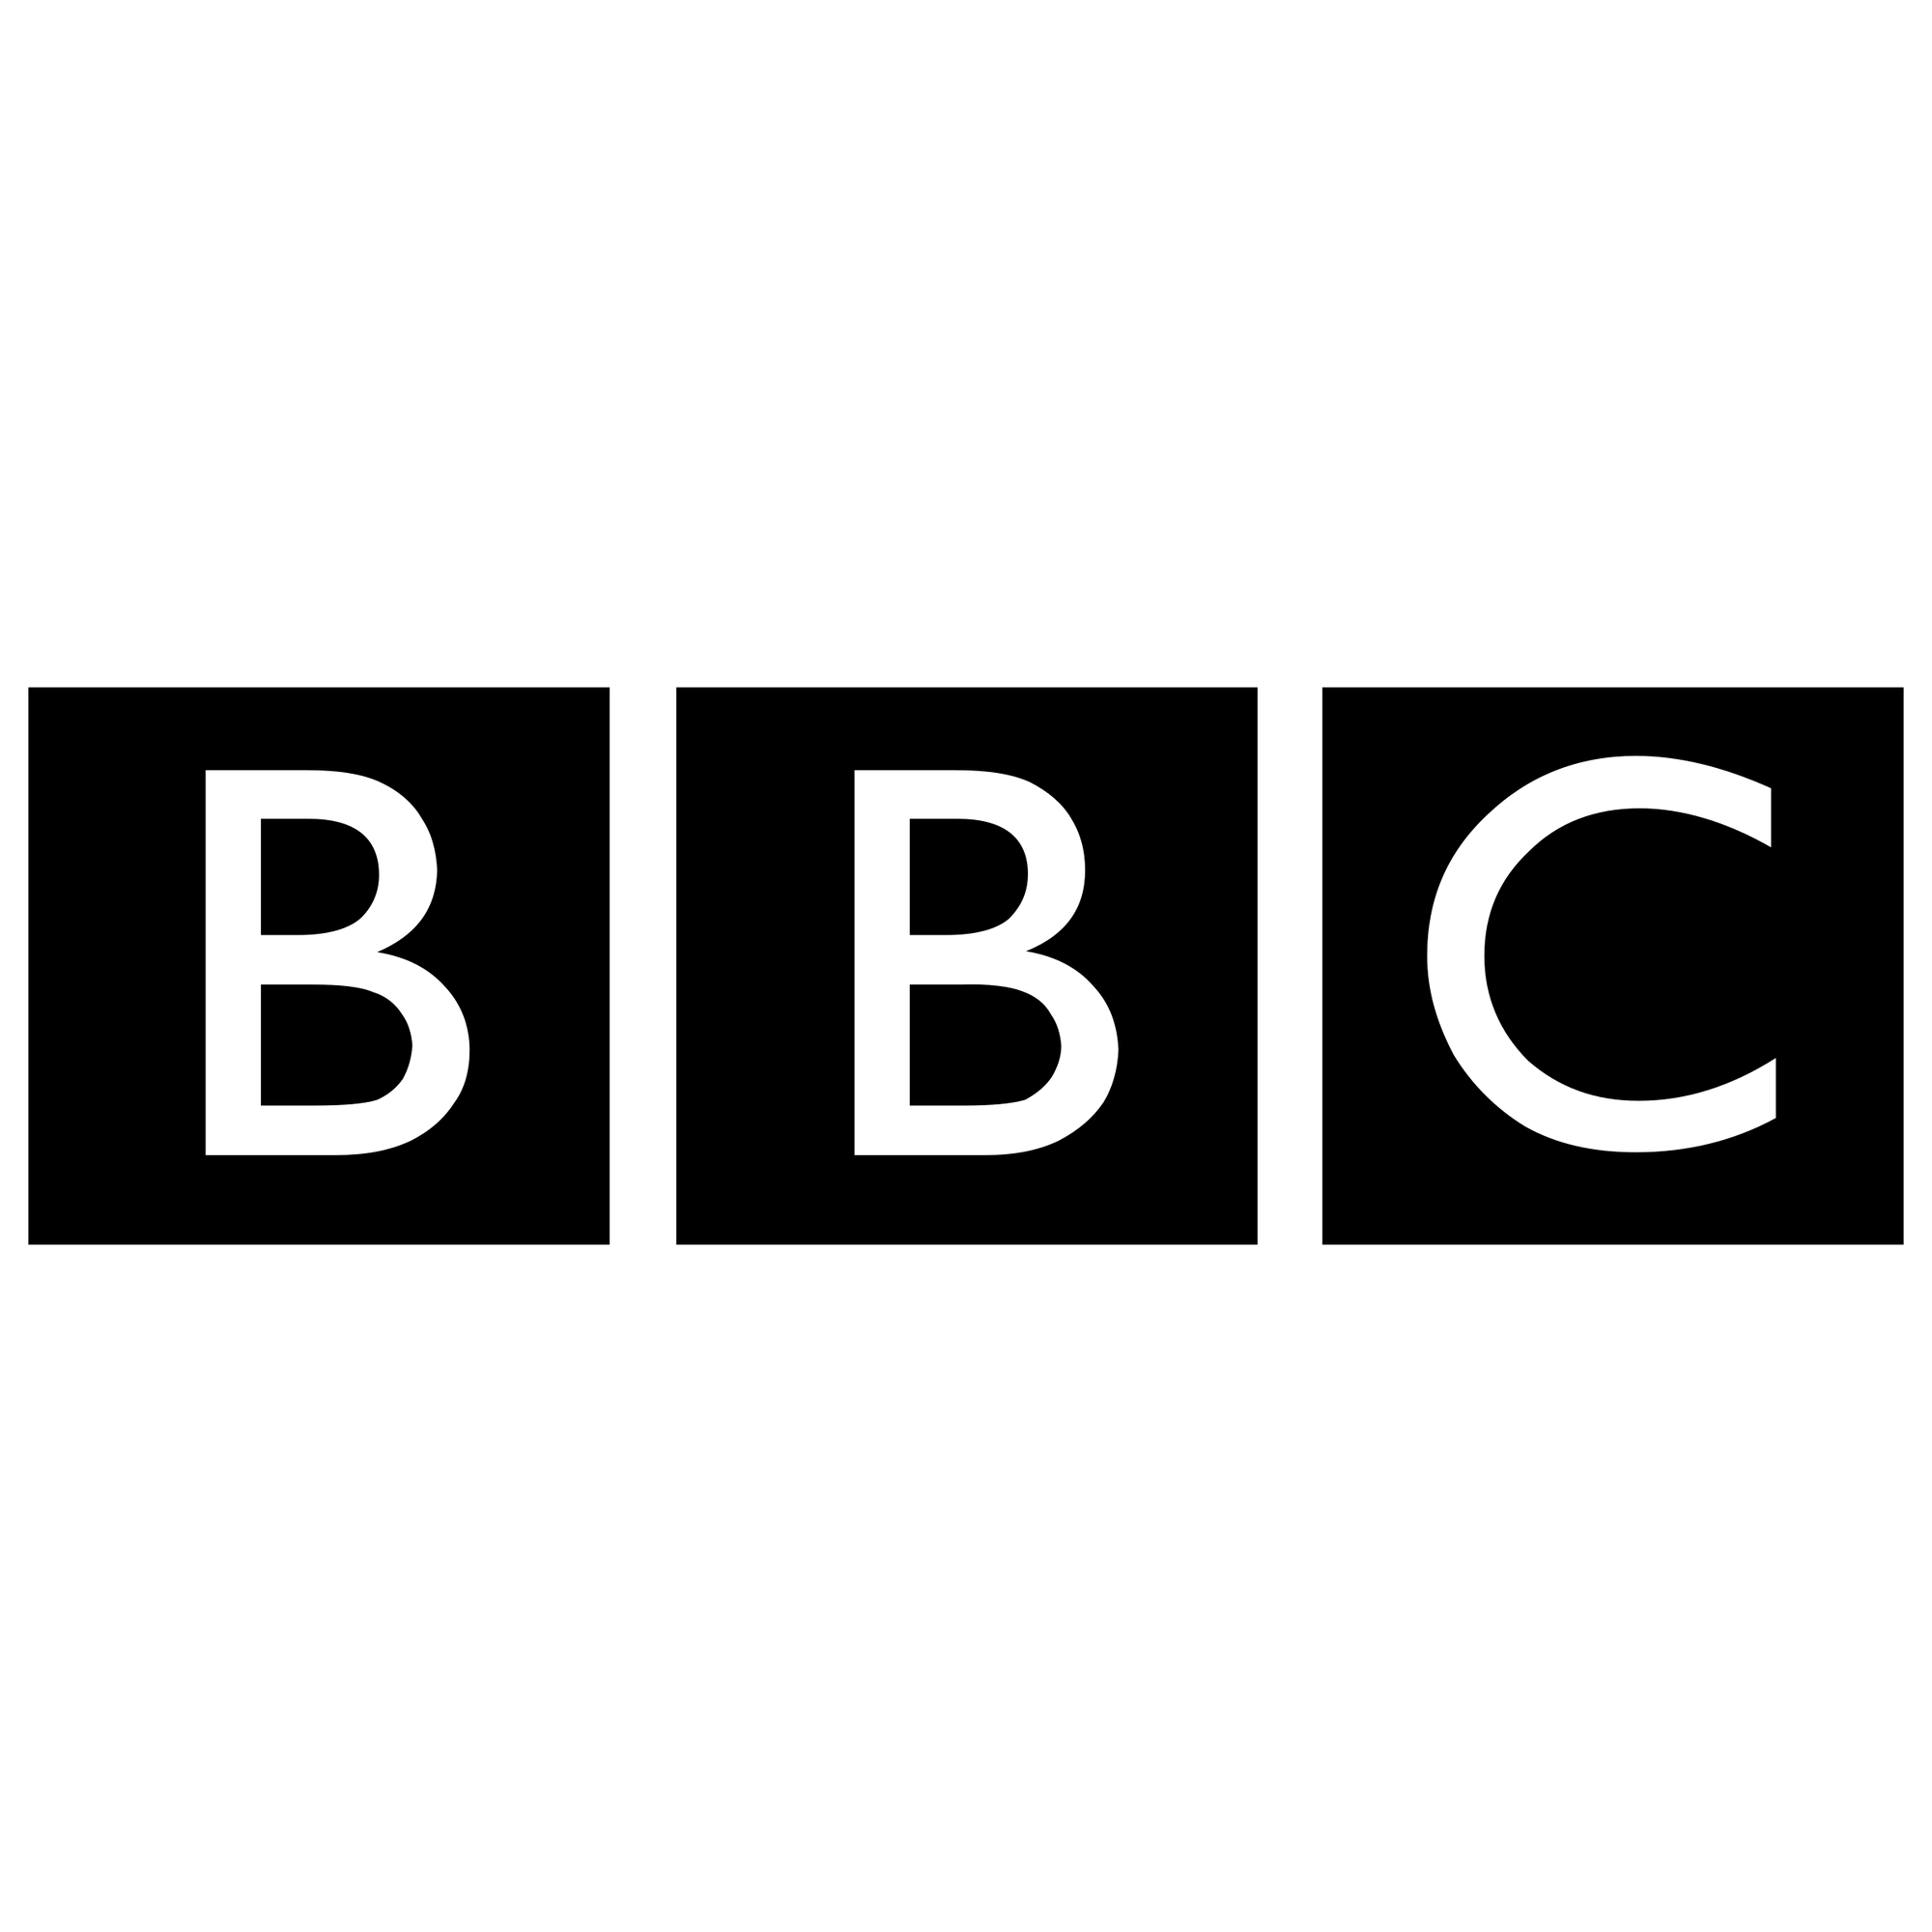 BBC logo black